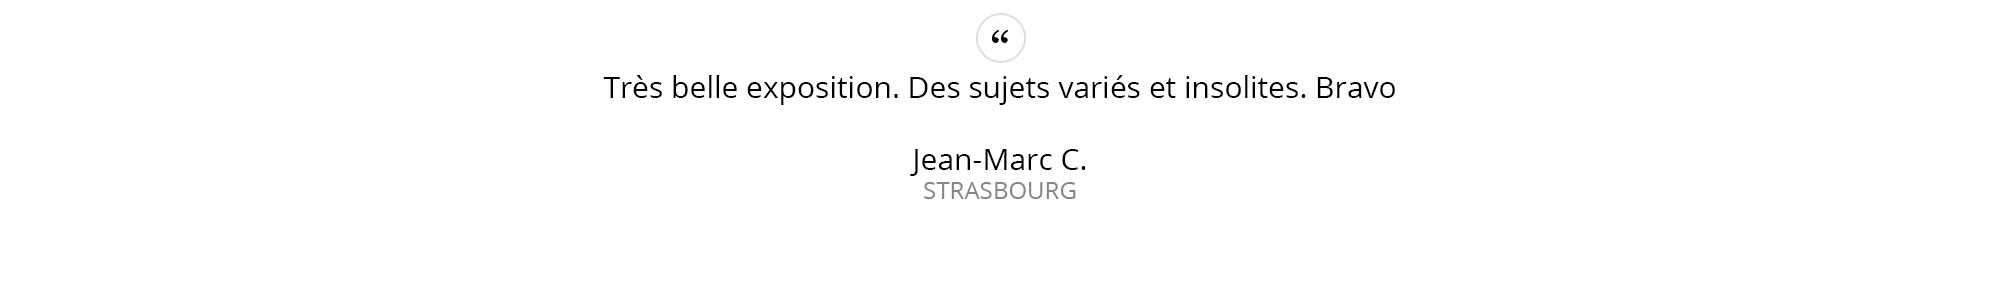 Jean-Marc-C.---STRASBOURG